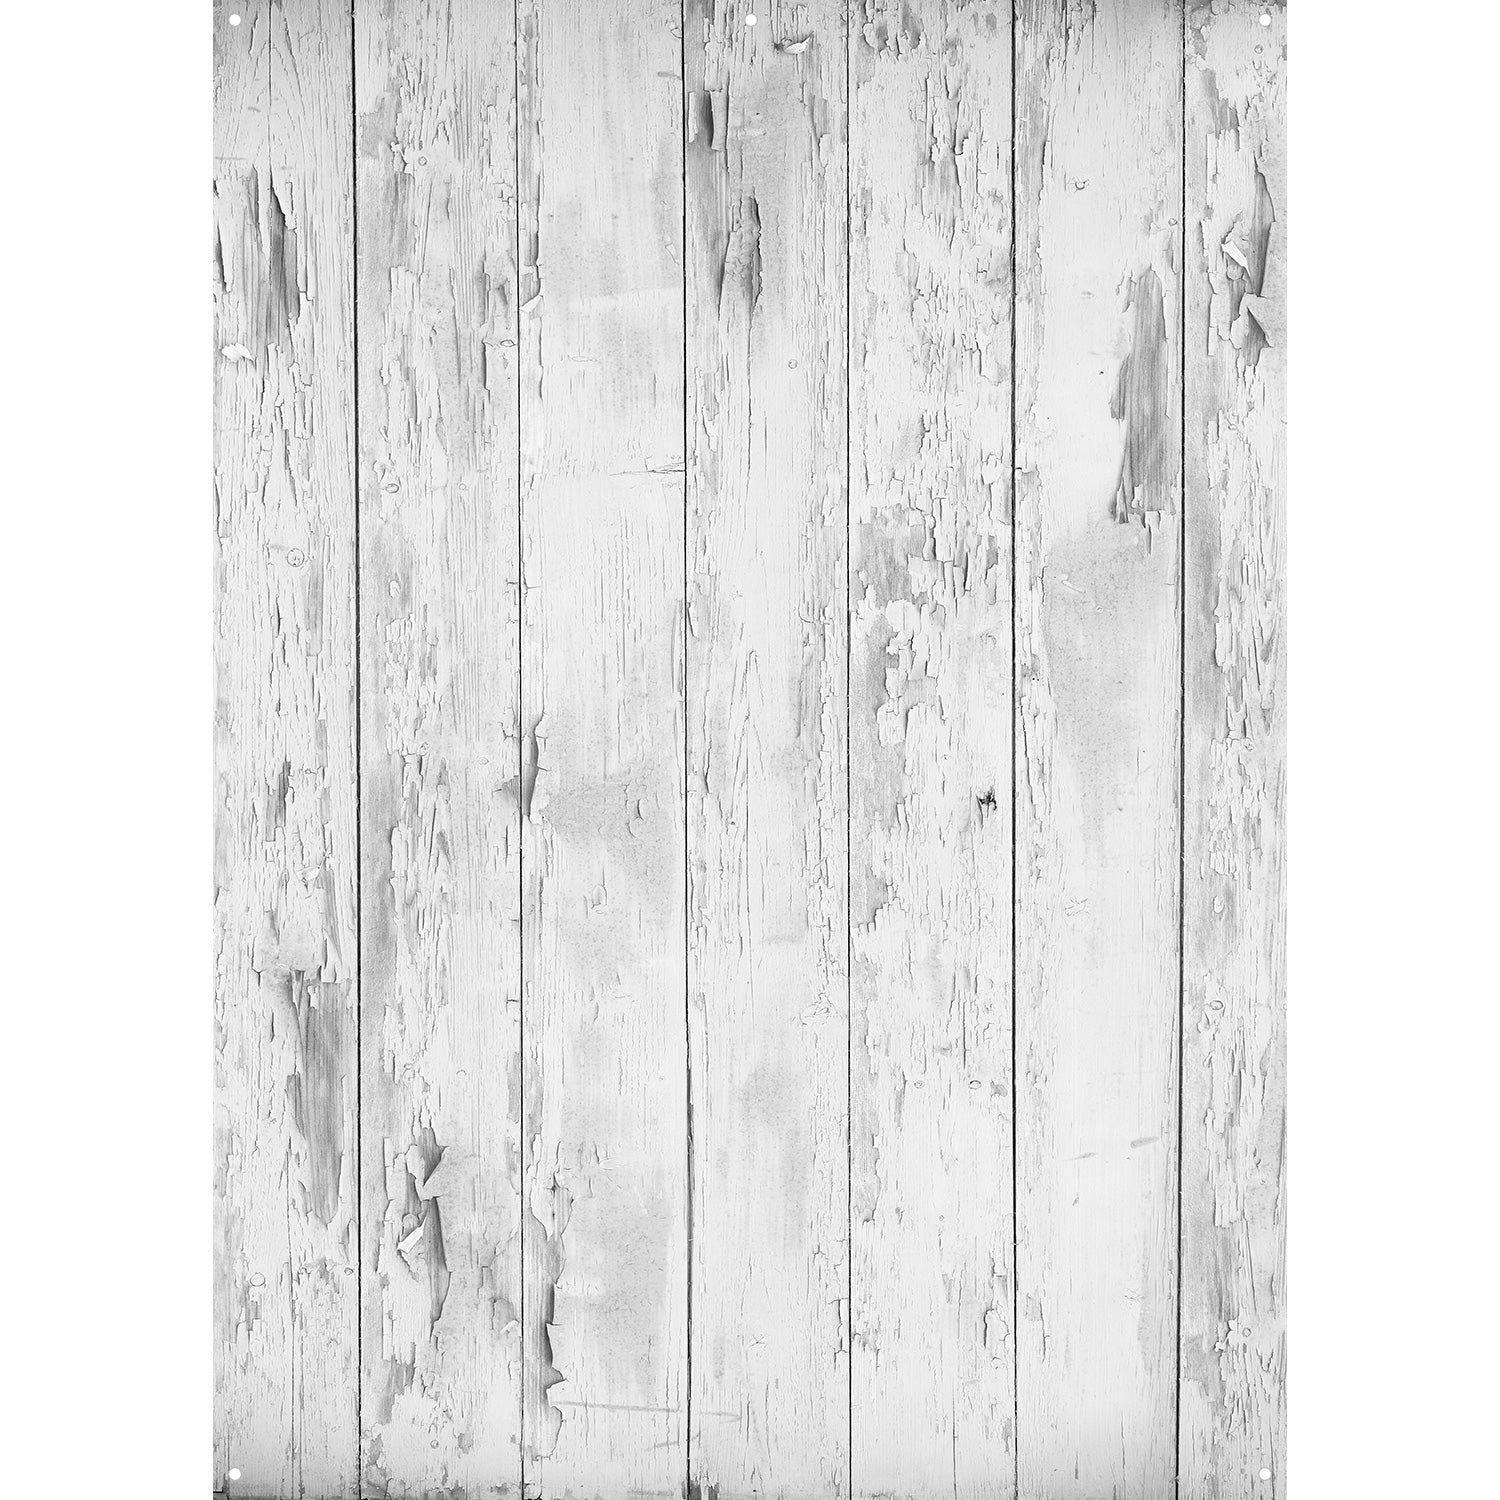 D0001 – Light Gray Distressed Wood Lightweight Canvas (5' x 7')